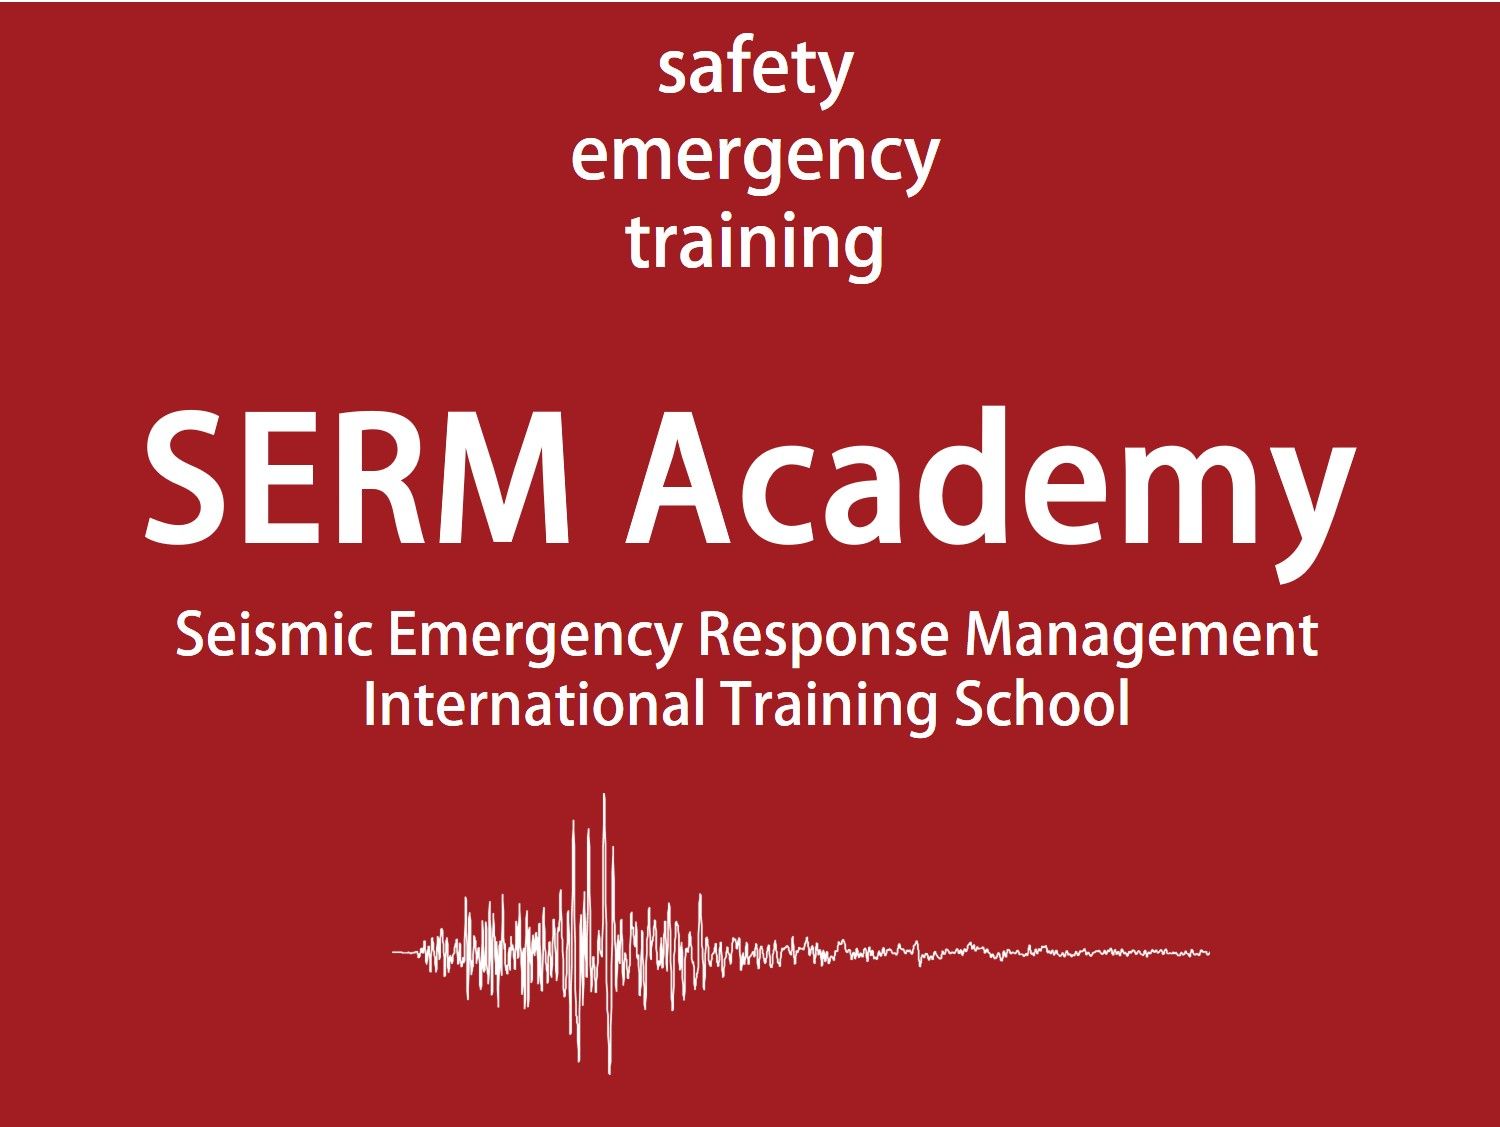 SERM Academy